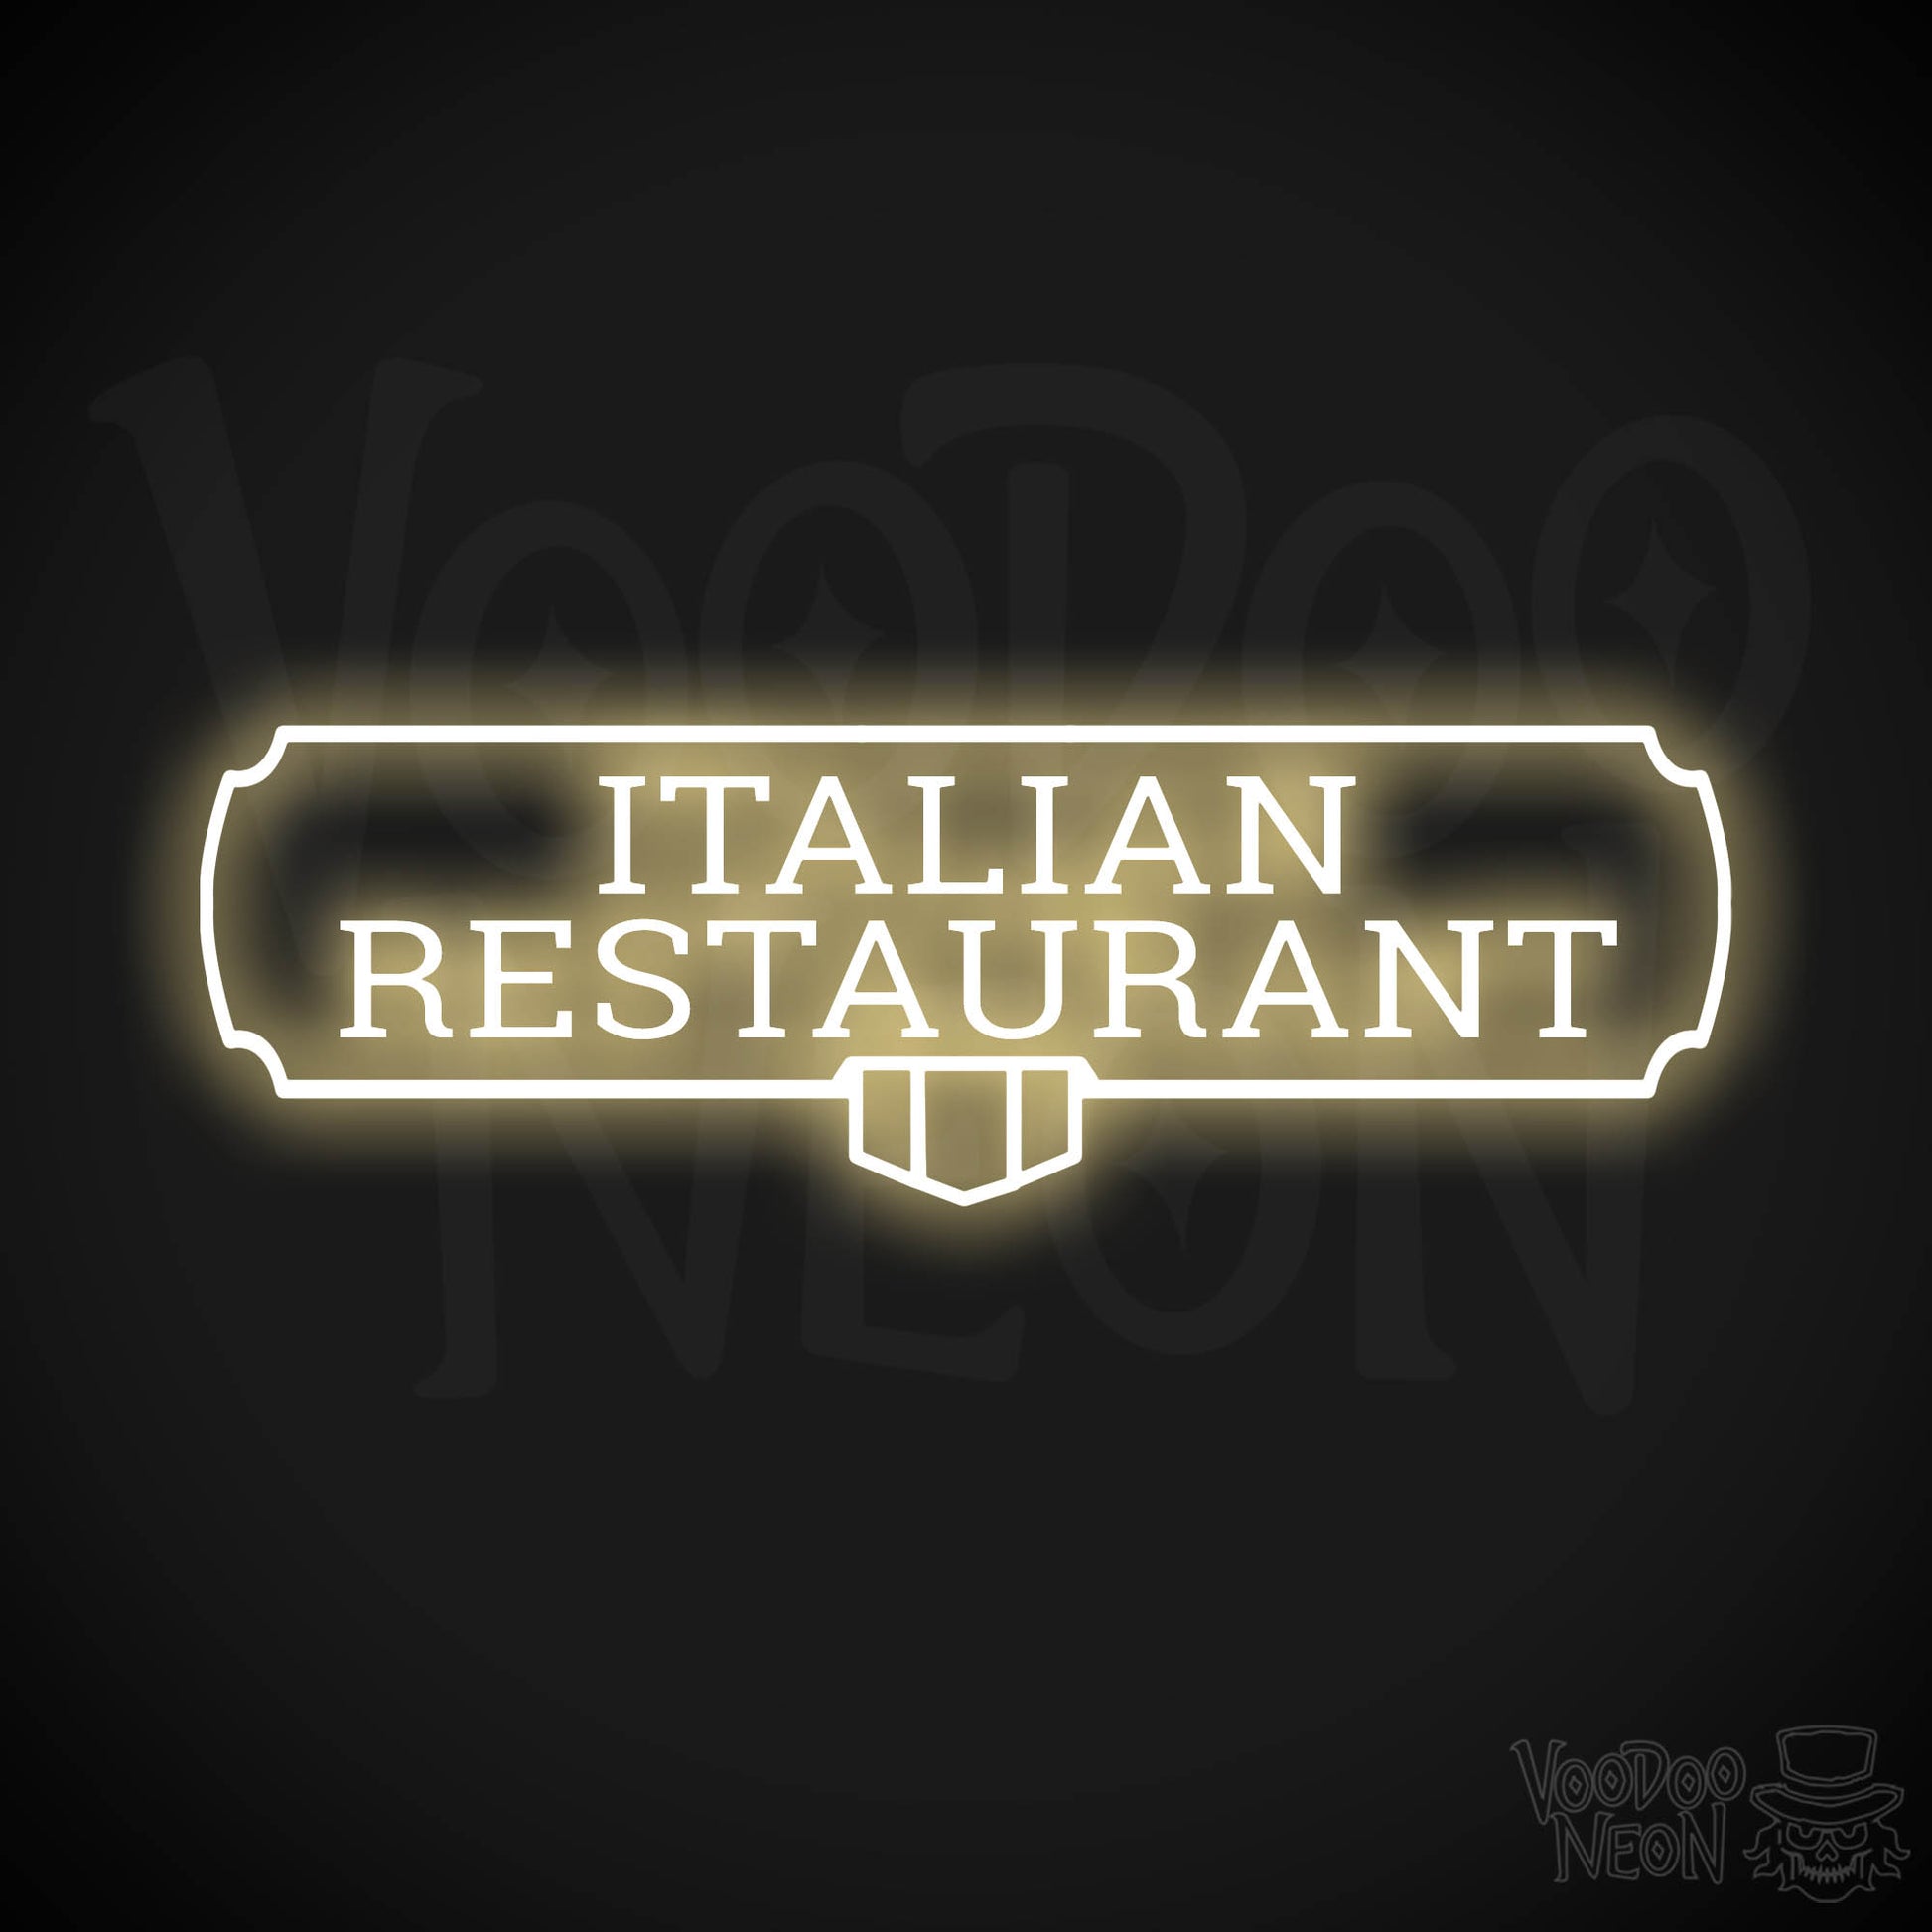 Italian Restaurant LED Neon - Warm White